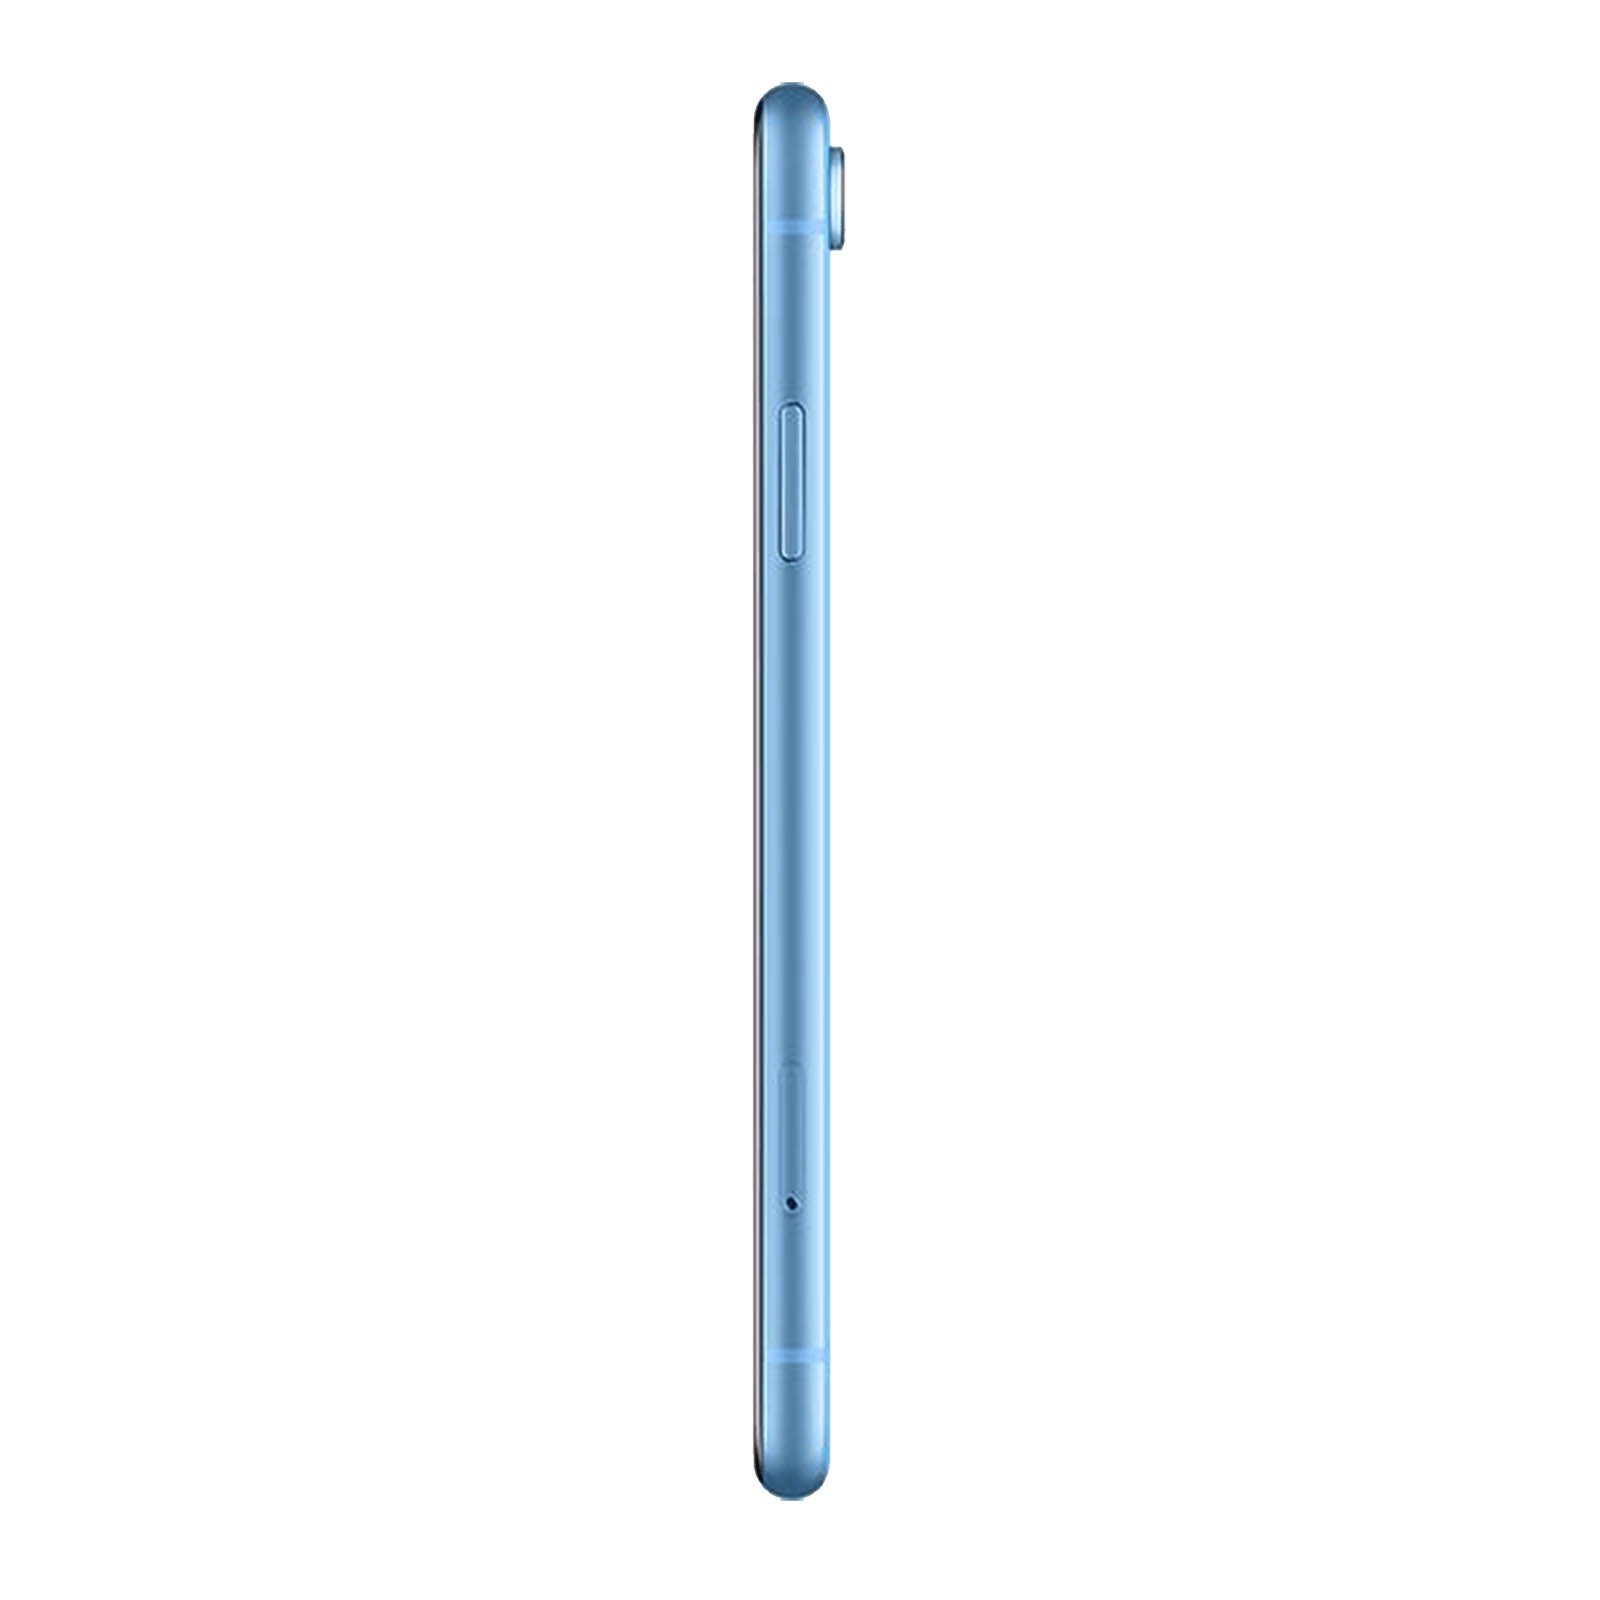 Restored Apple iPhone XR 64GB Blue Fully Unlocked Smartphone (Refurbished)